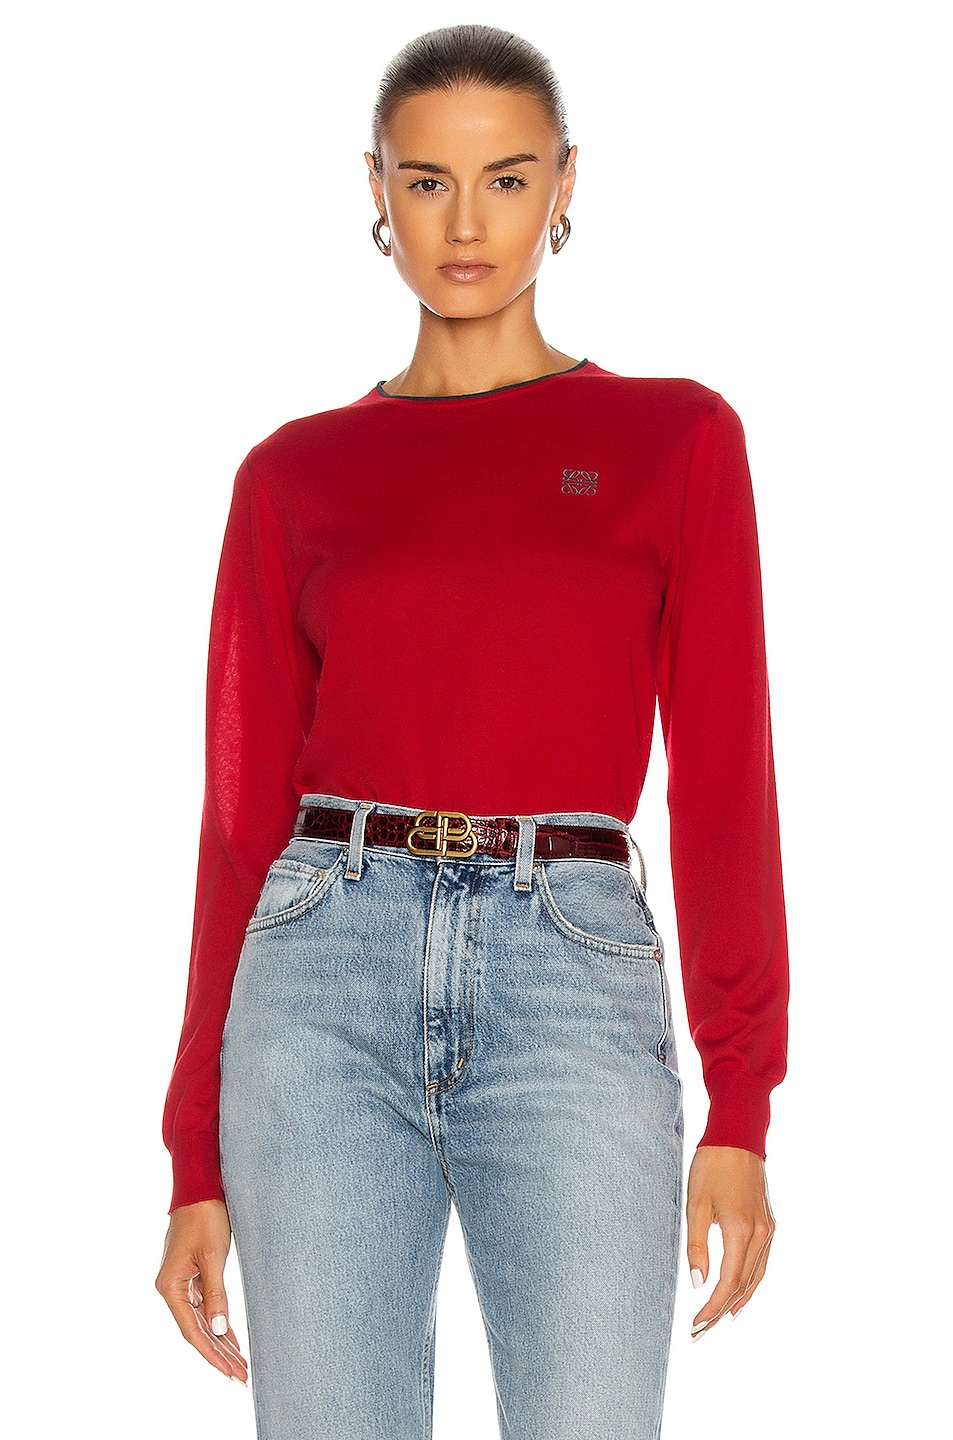 Loewe Anagram Crewneck Sweater in Red Earth | FWRD